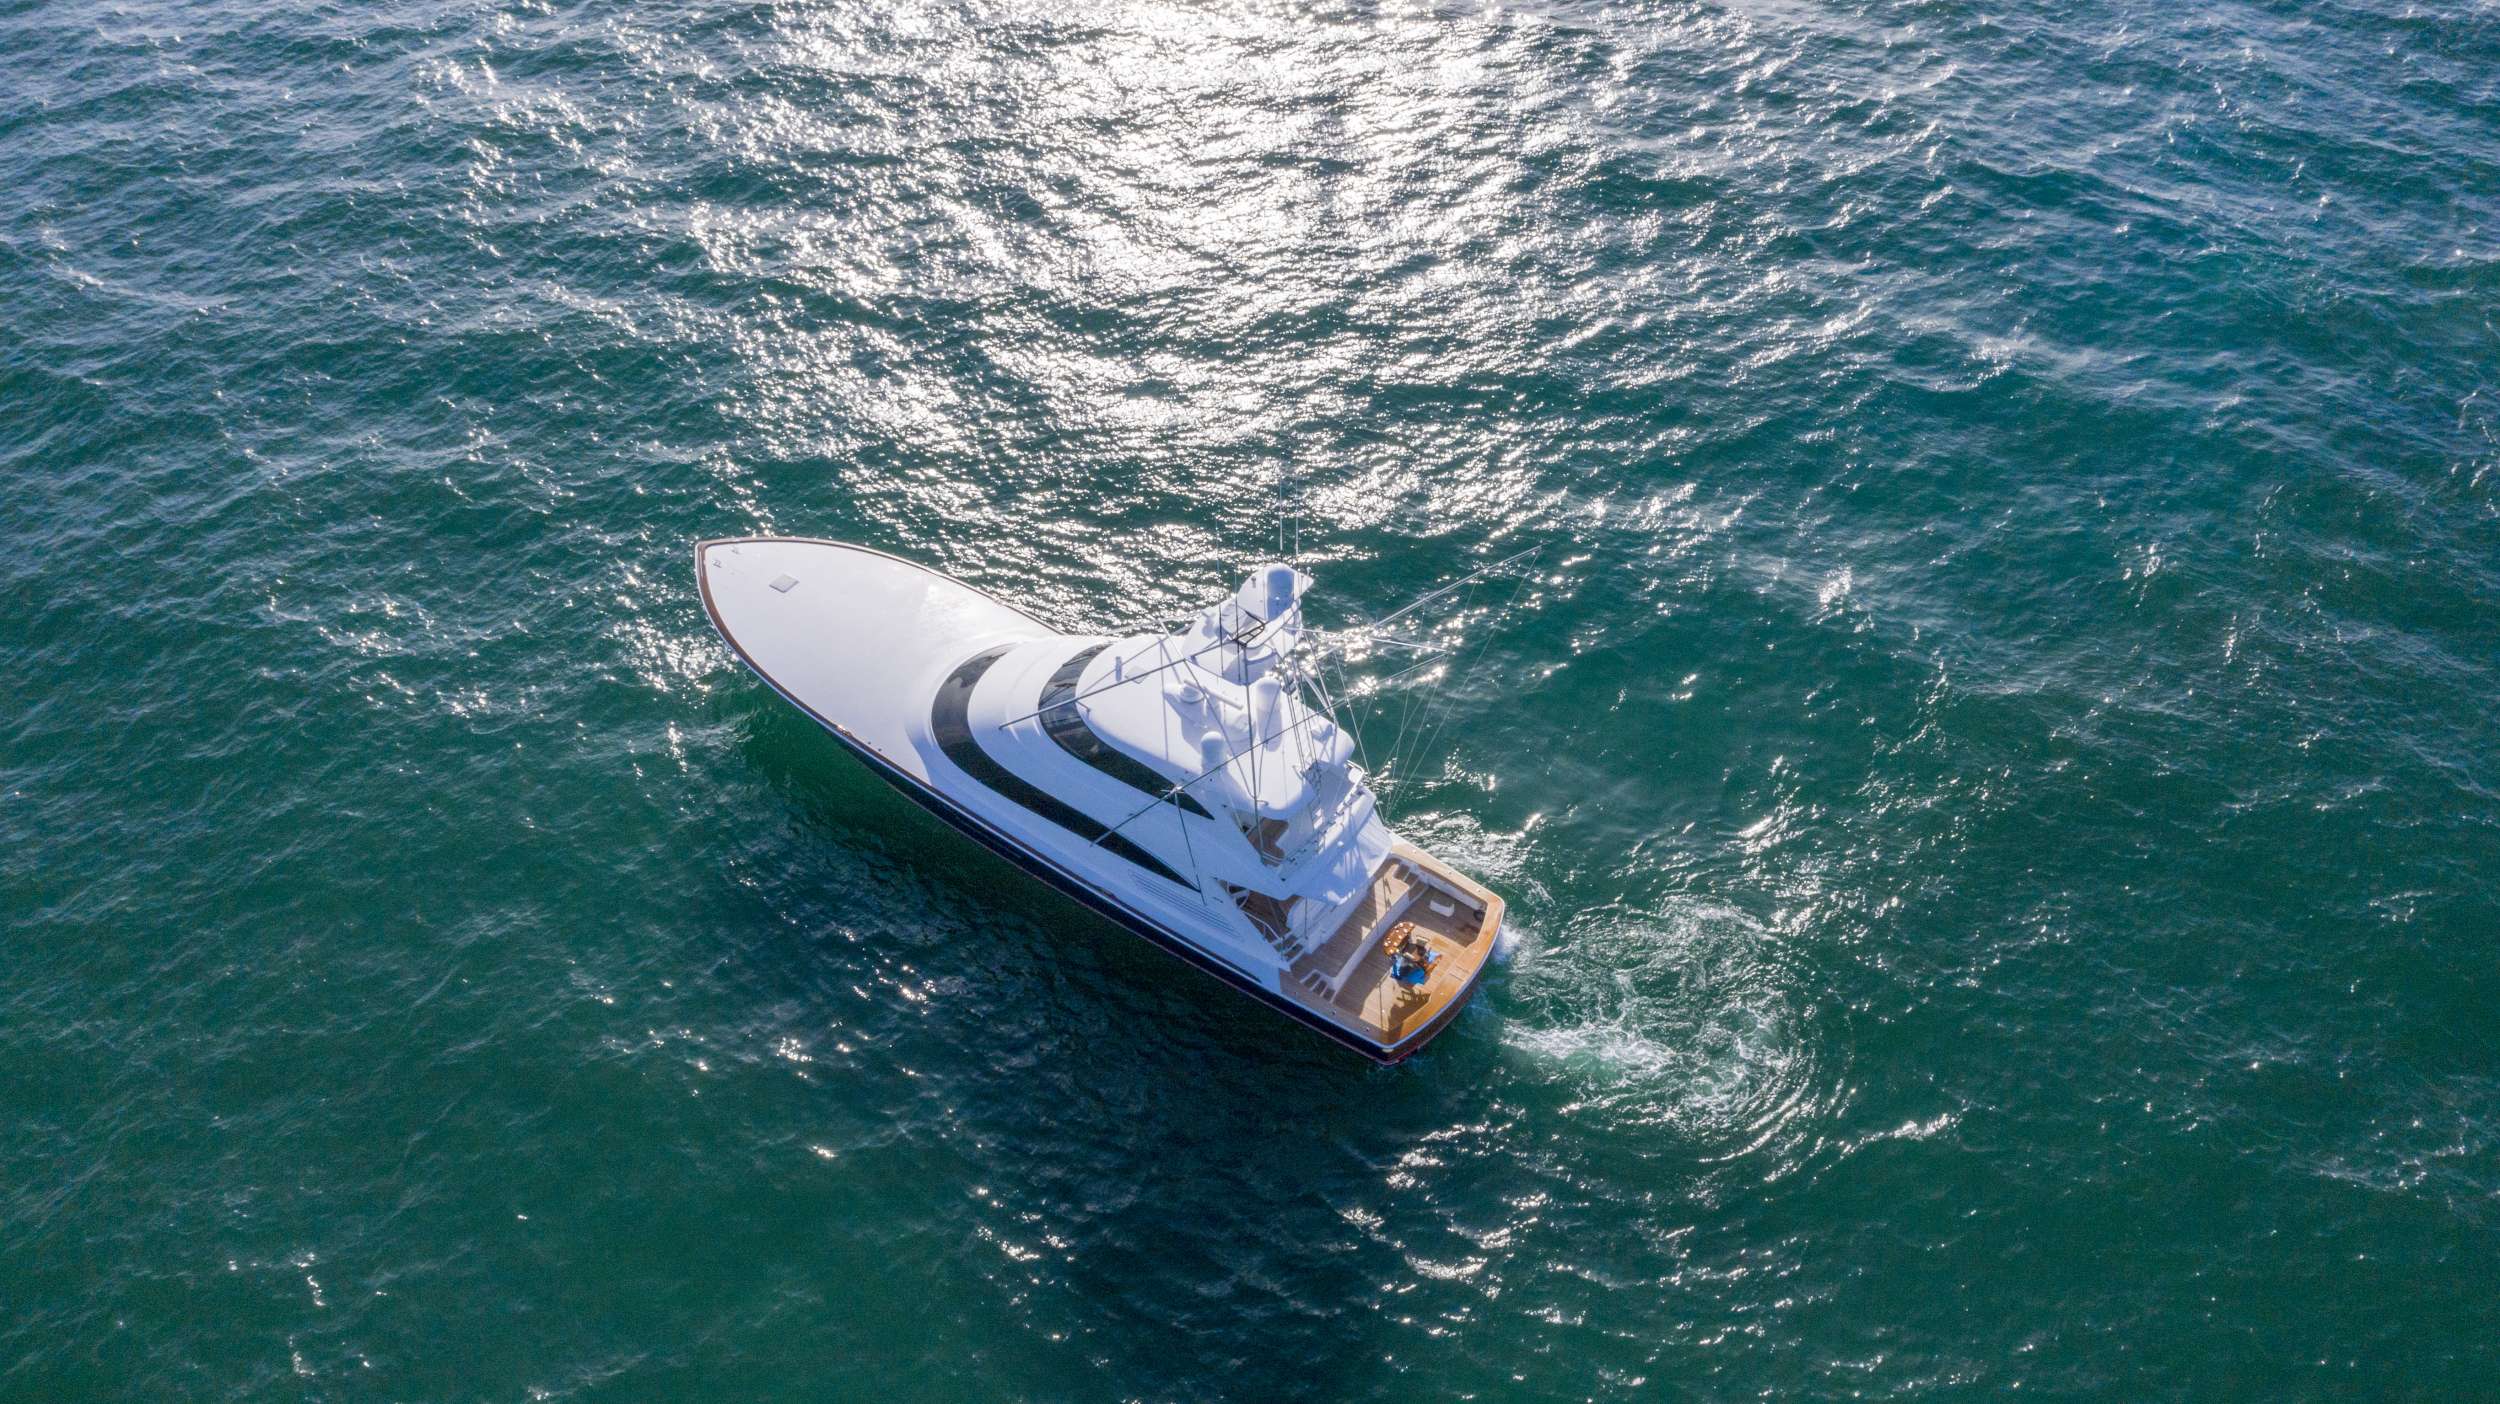 Motor Yacht 'SPECULATOR 92', 6 PAX, 3 Crew, 92.00 Ft, 28.00 Meters, Built 2017, Viking, U.S.A, Refit Year 2020